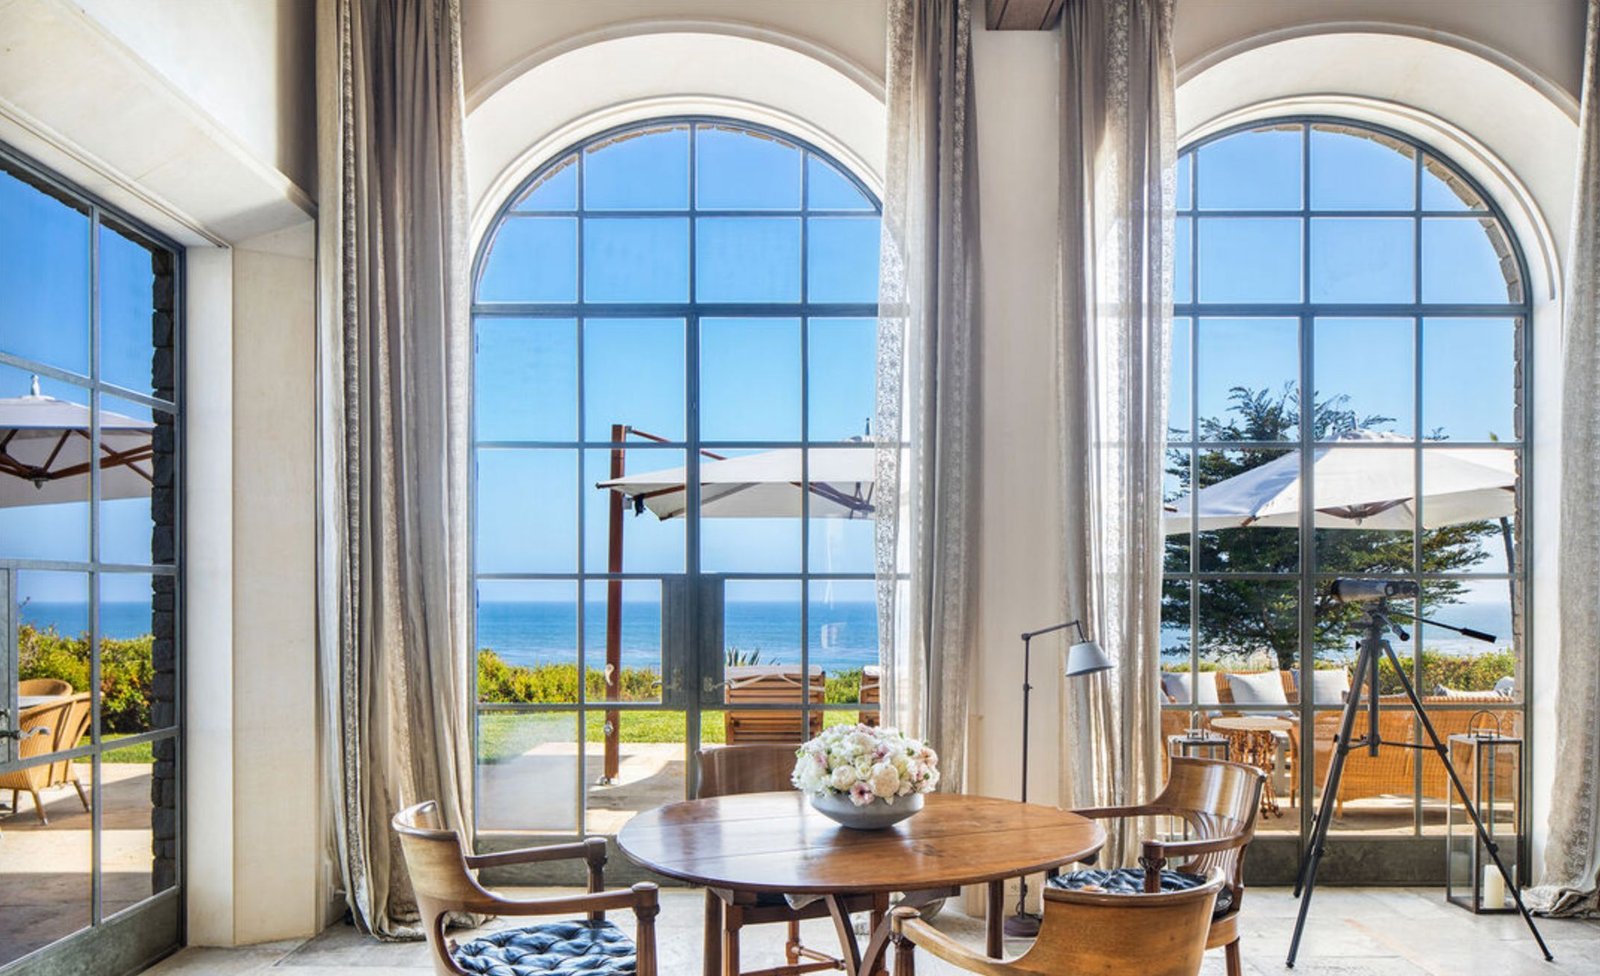 Luxury private gated estate facing the pacific ocean in Malibu